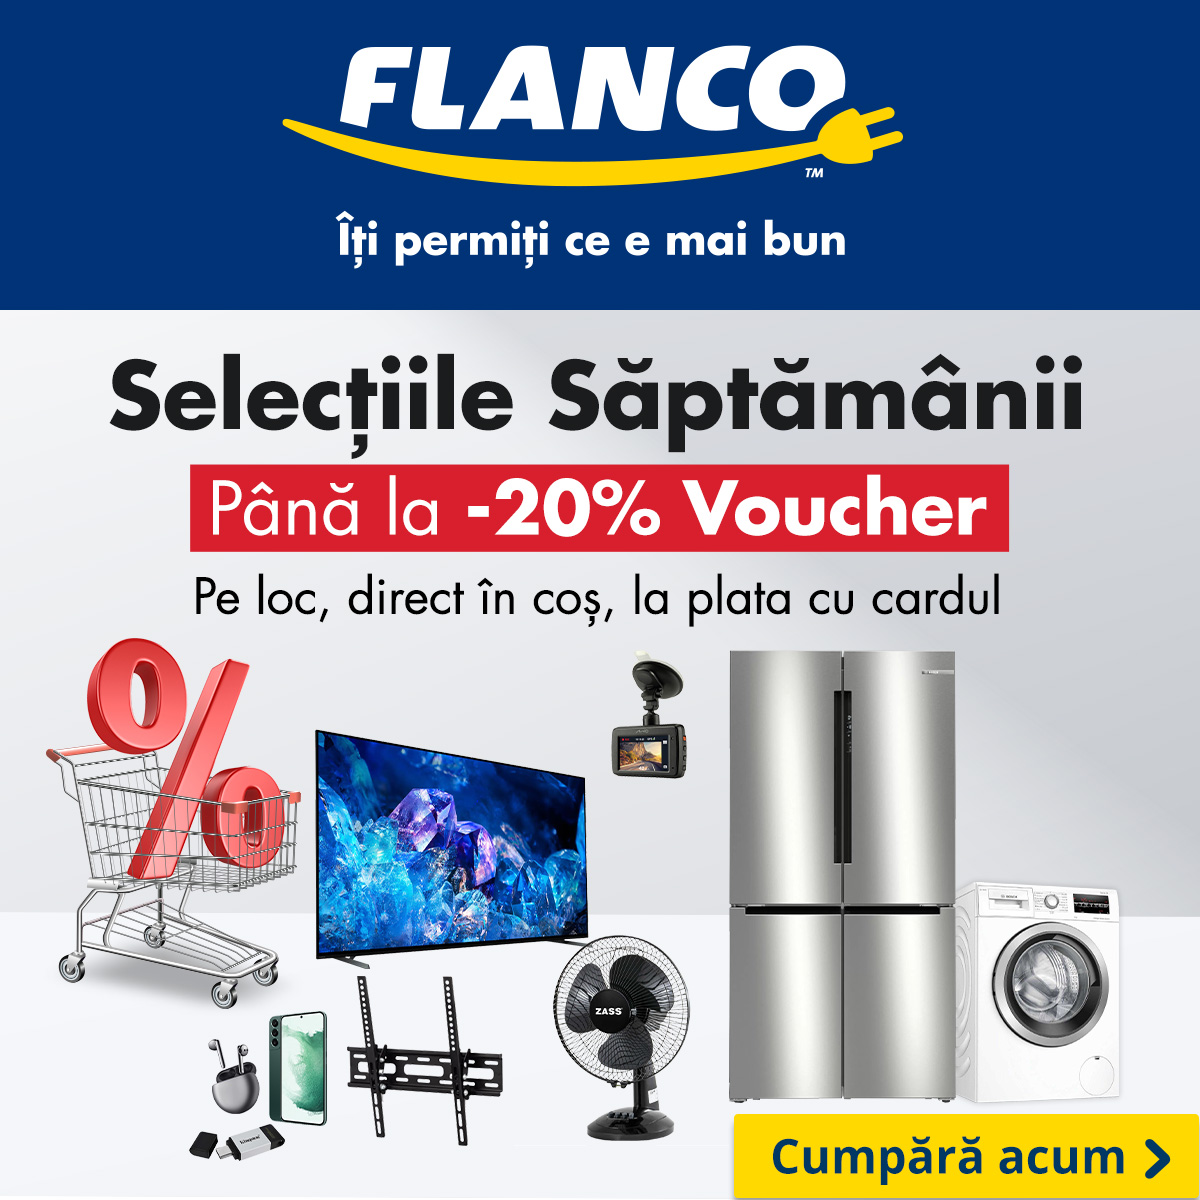 Flanco - Selectiile Saptamanii